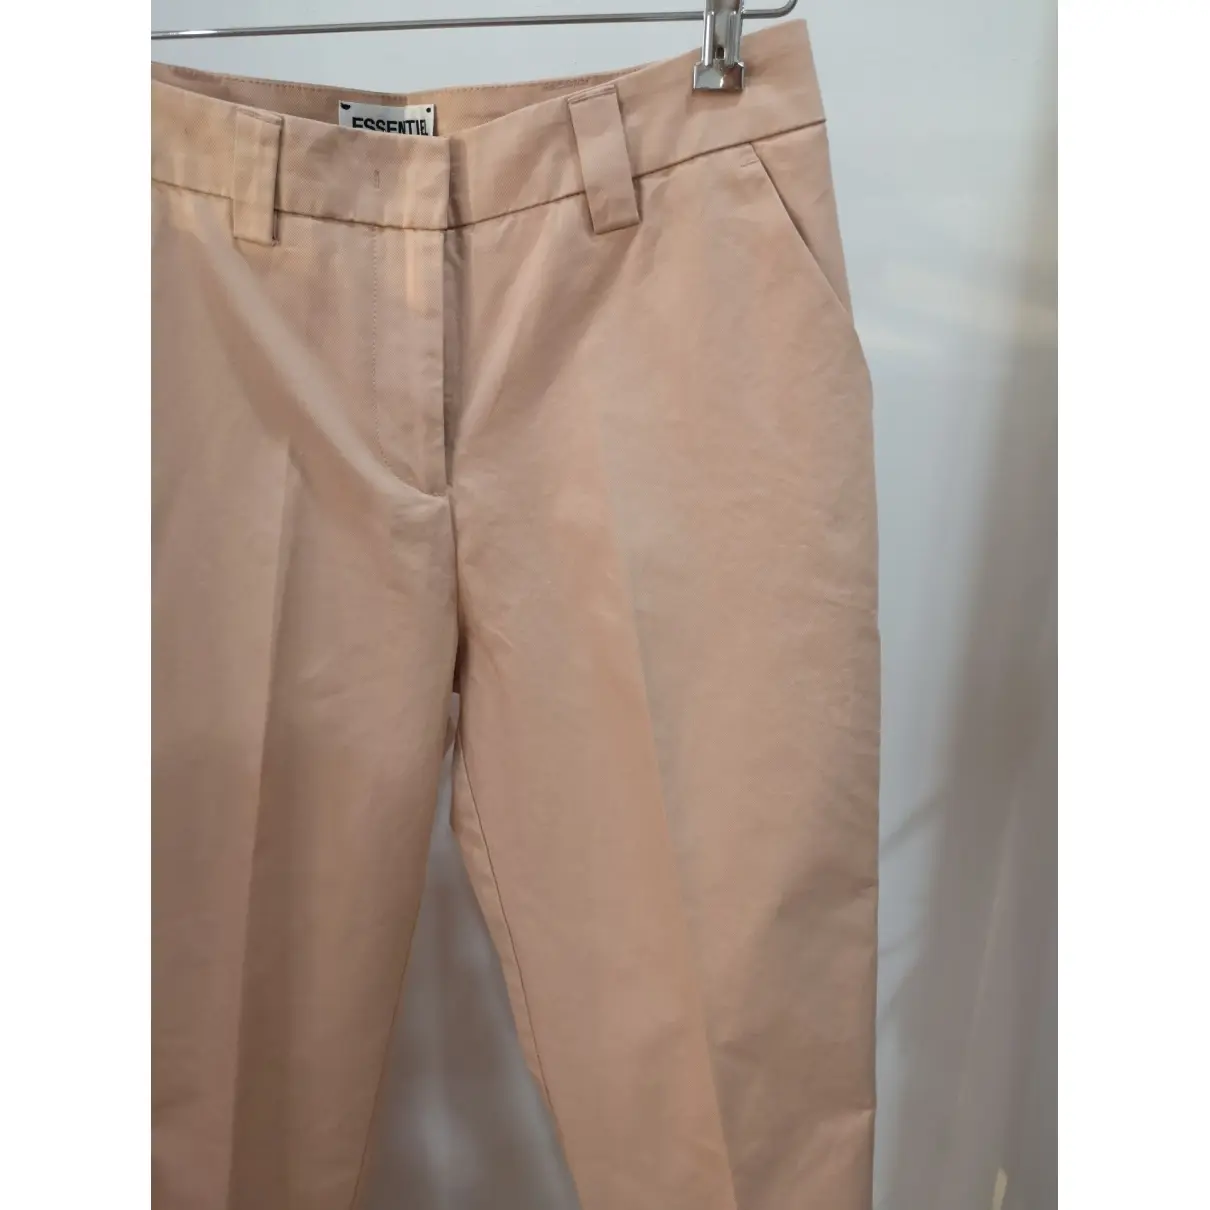 Essentiel Antwerp Chino pants for sale